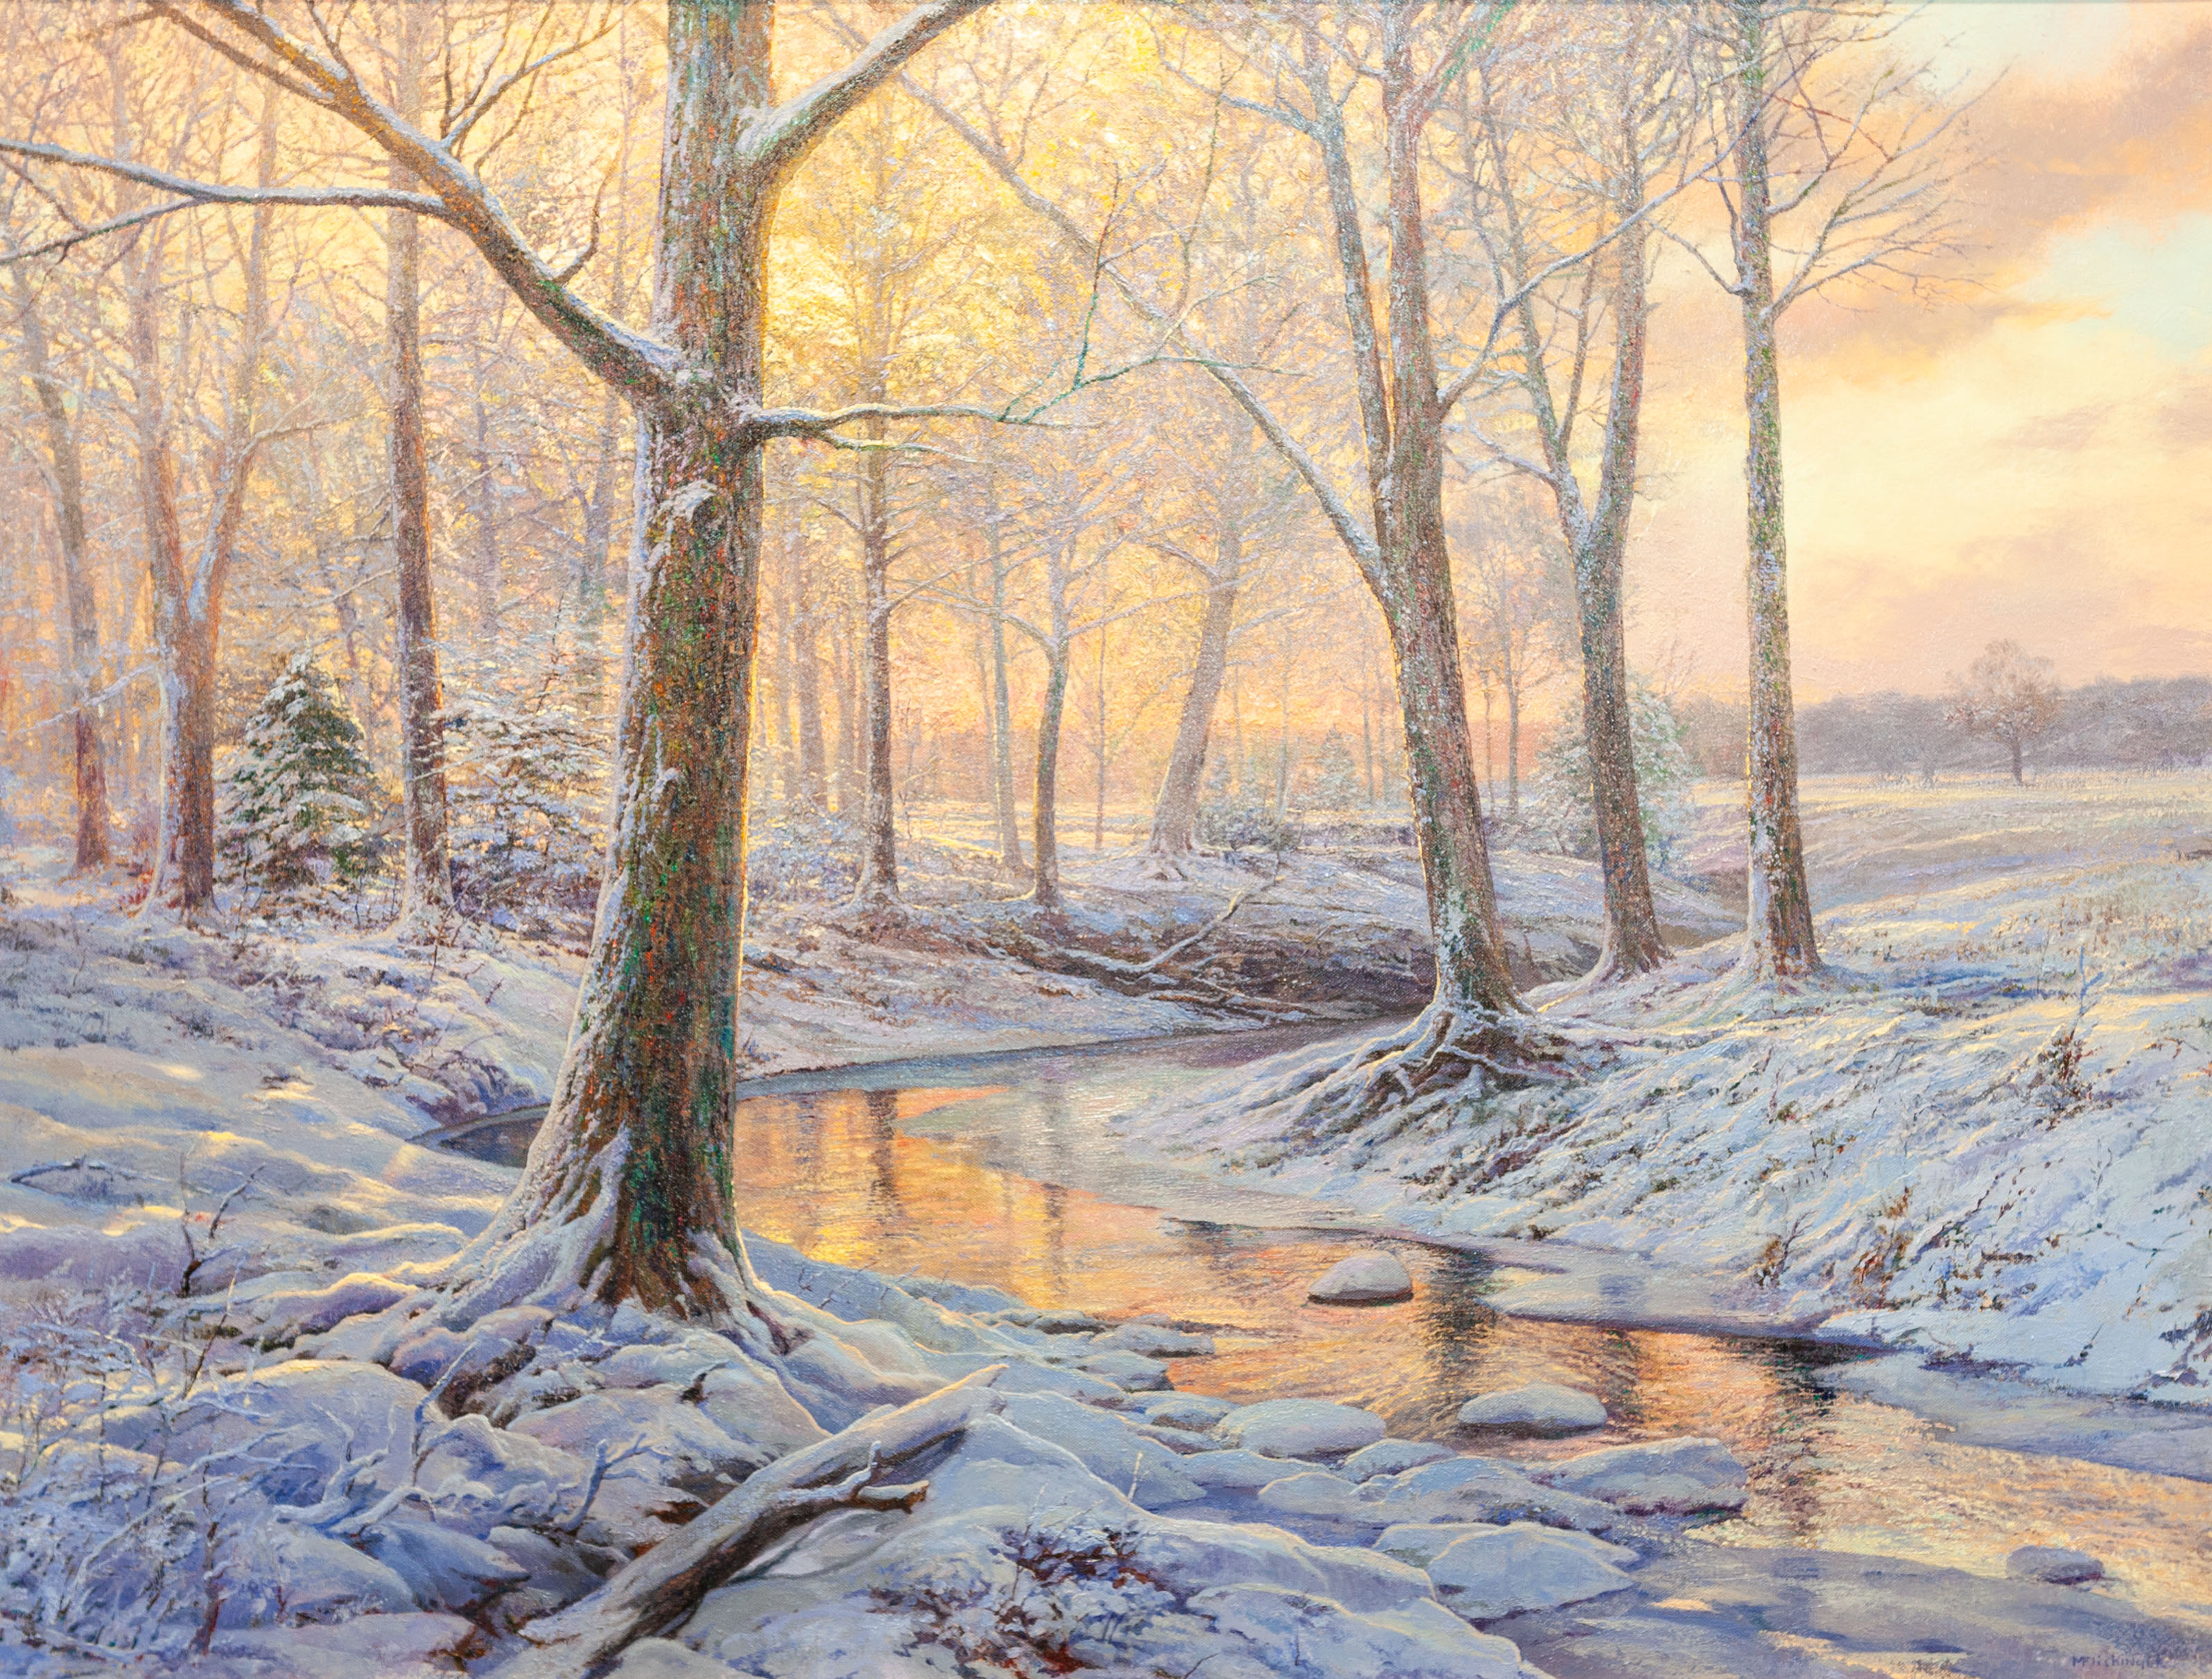 Mark Flickinger, “Winter Morning, Grouse Creek Valley”, oil on canvas